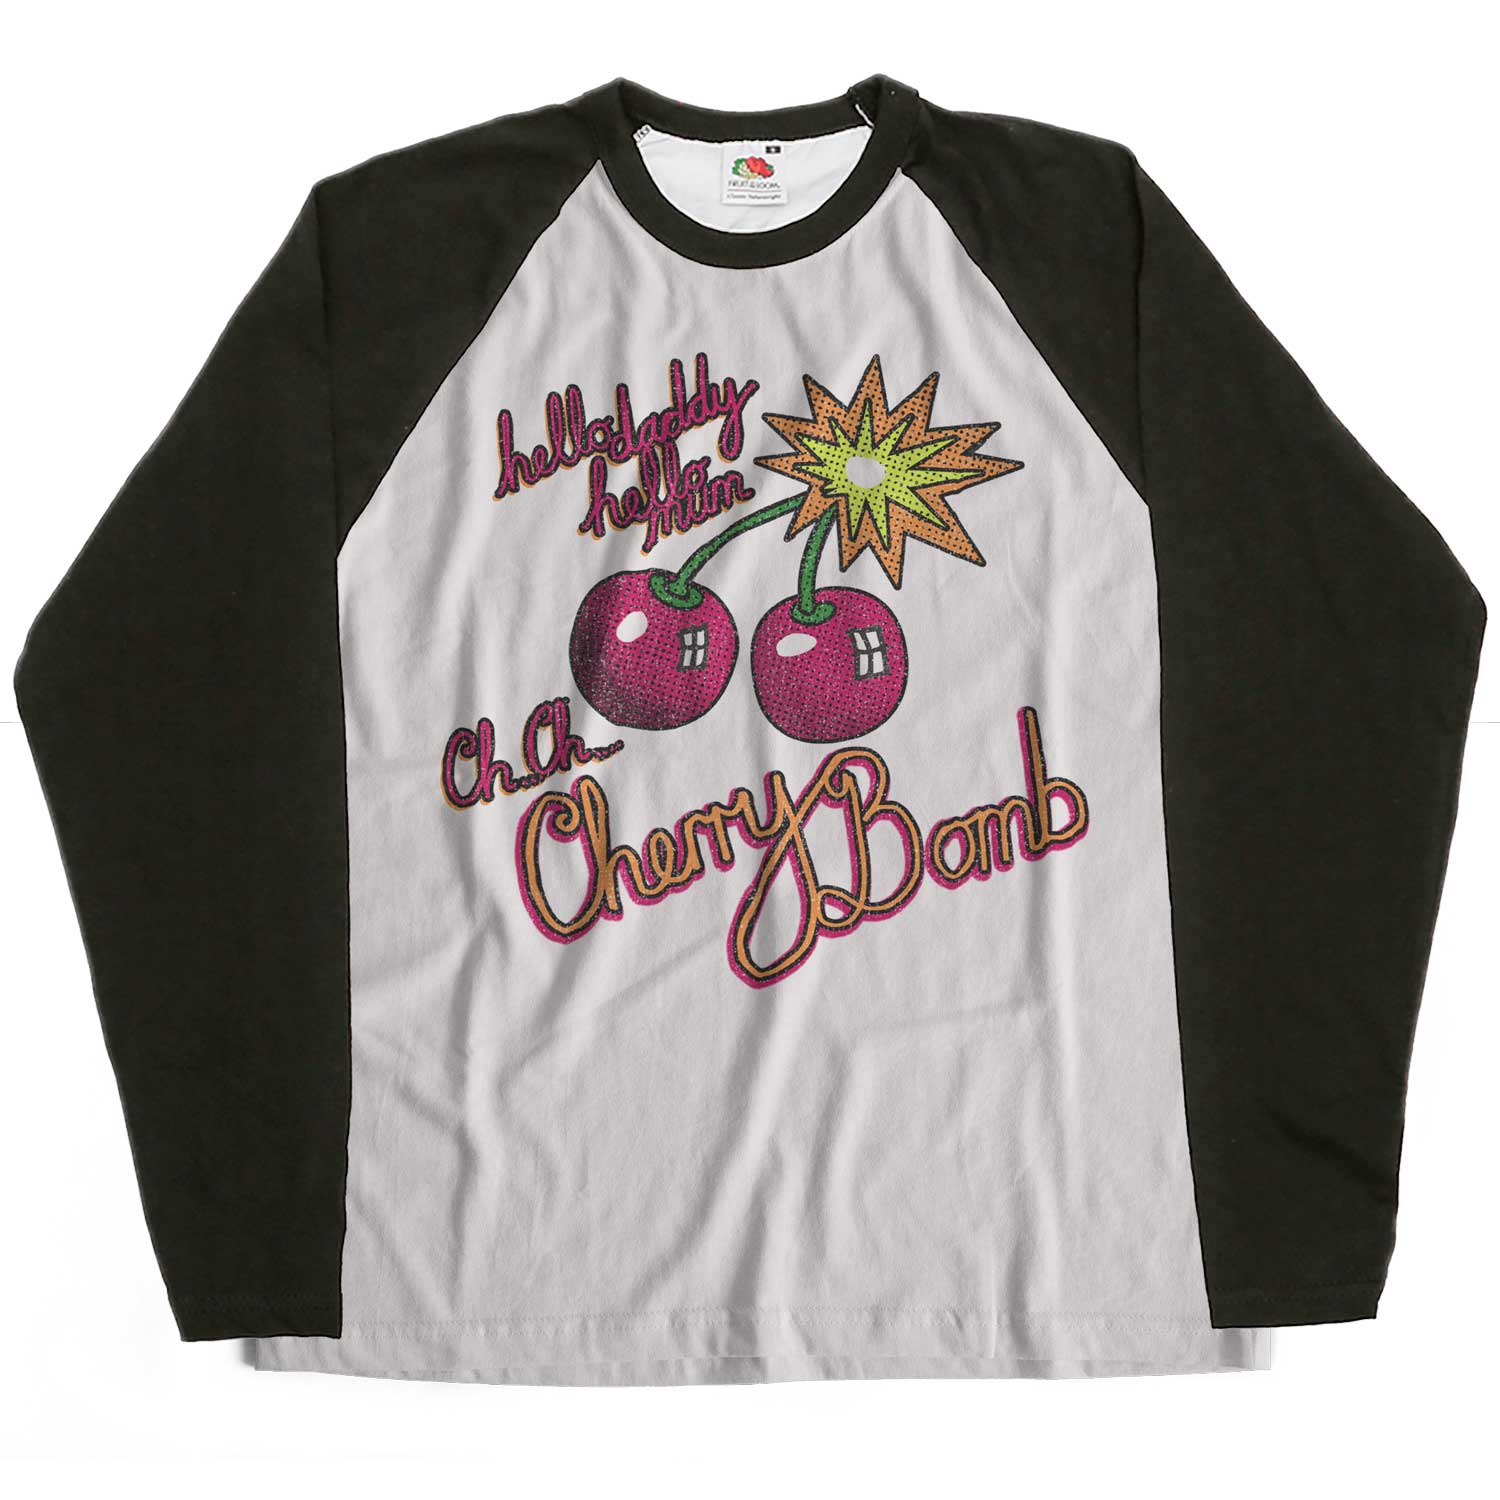 Old Skool Hooligans Inspired by The Runaways T Shirt - Cherry Bomb Retro Pop Classic